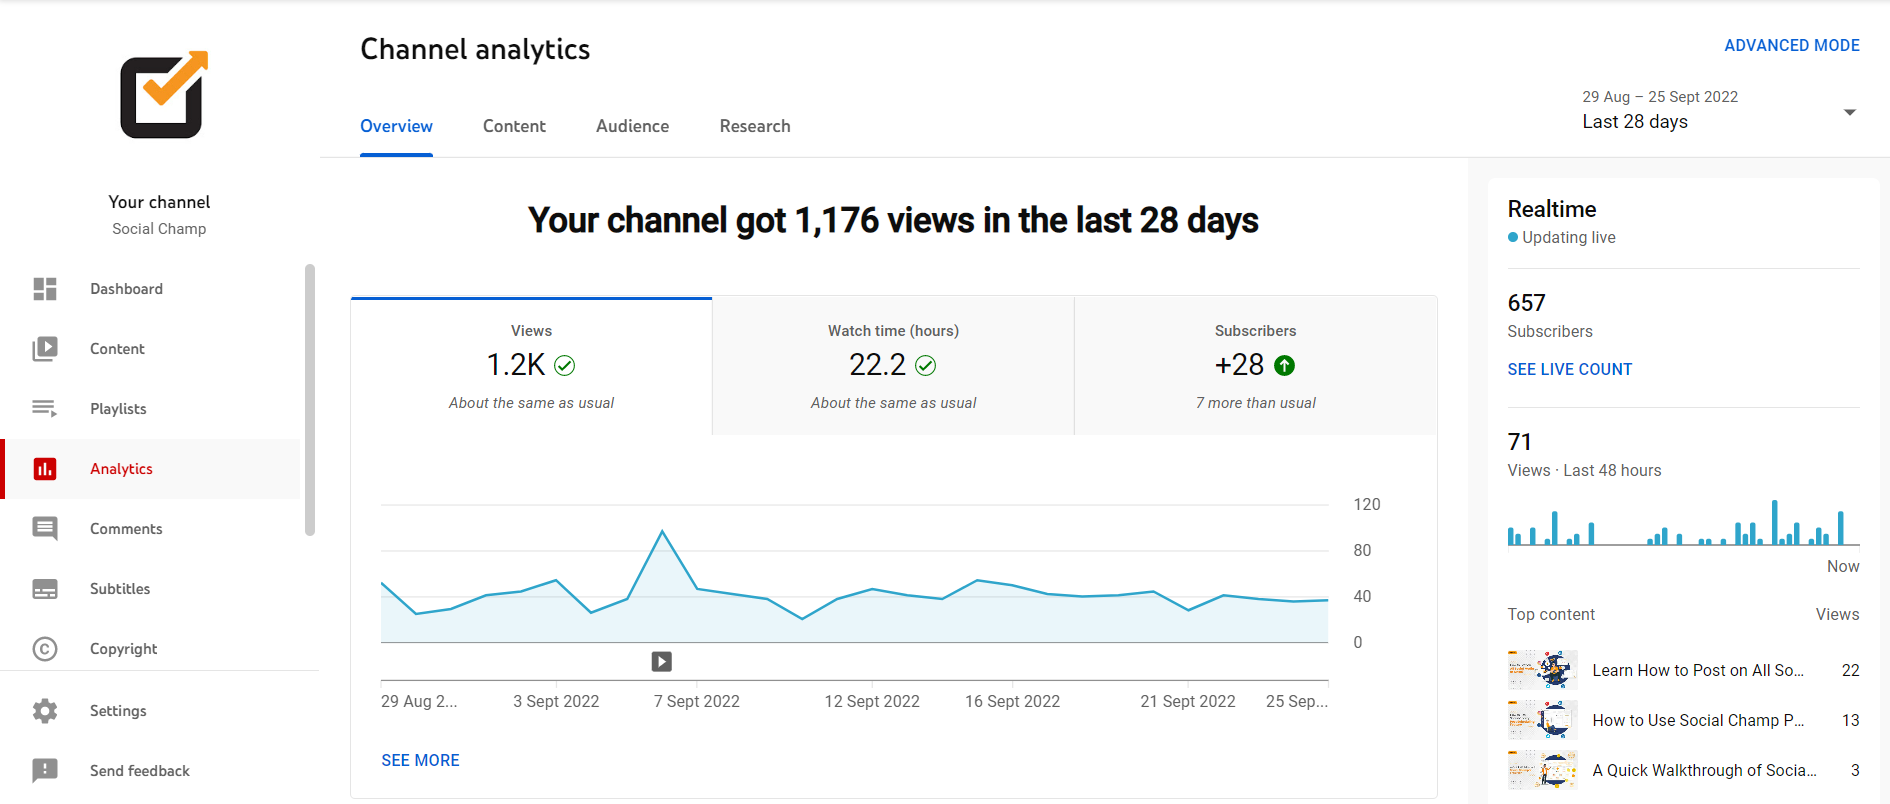 YouTube’s Channel Analytics